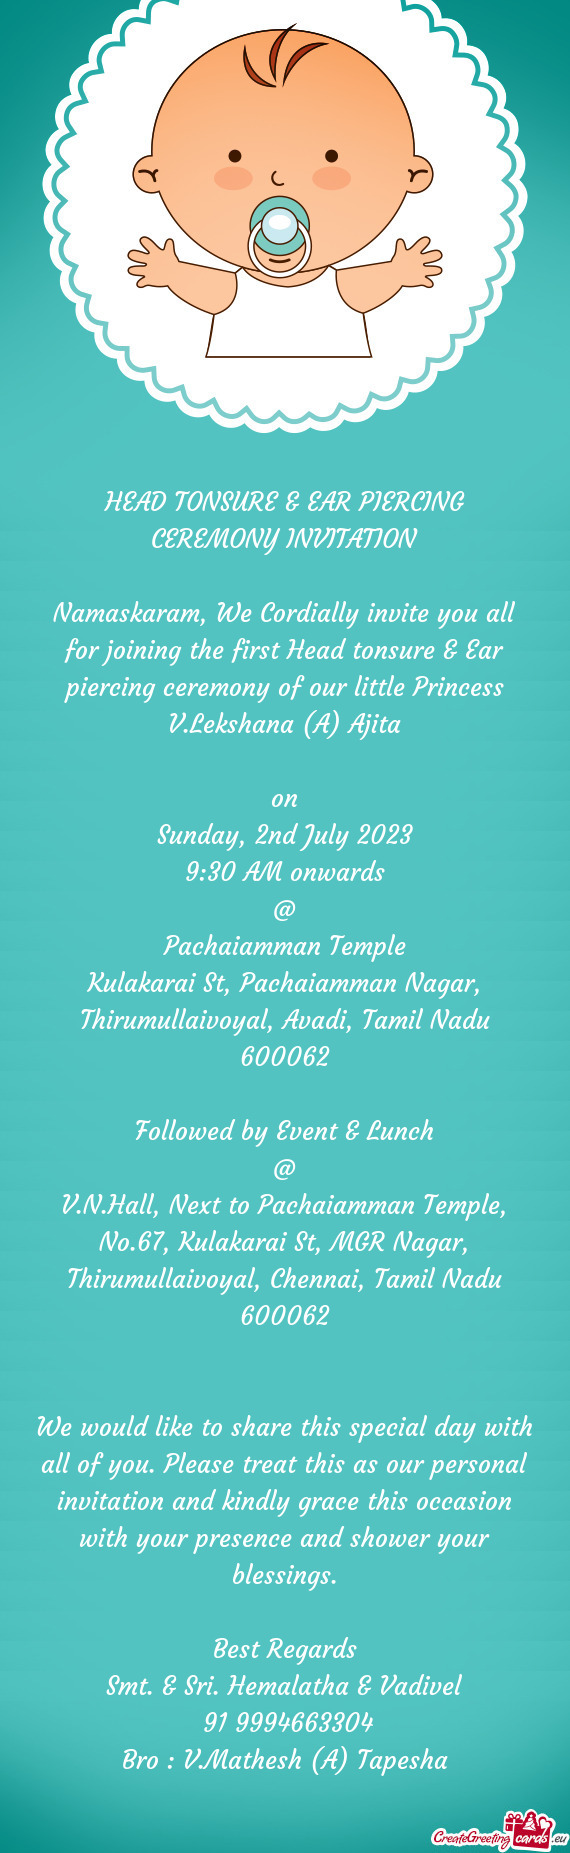 V.N.Hall, Next to Pachaiamman Temple, No.67, Kulakarai St, MGR Nagar, Thirumullaivoyal, Chennai, Tam